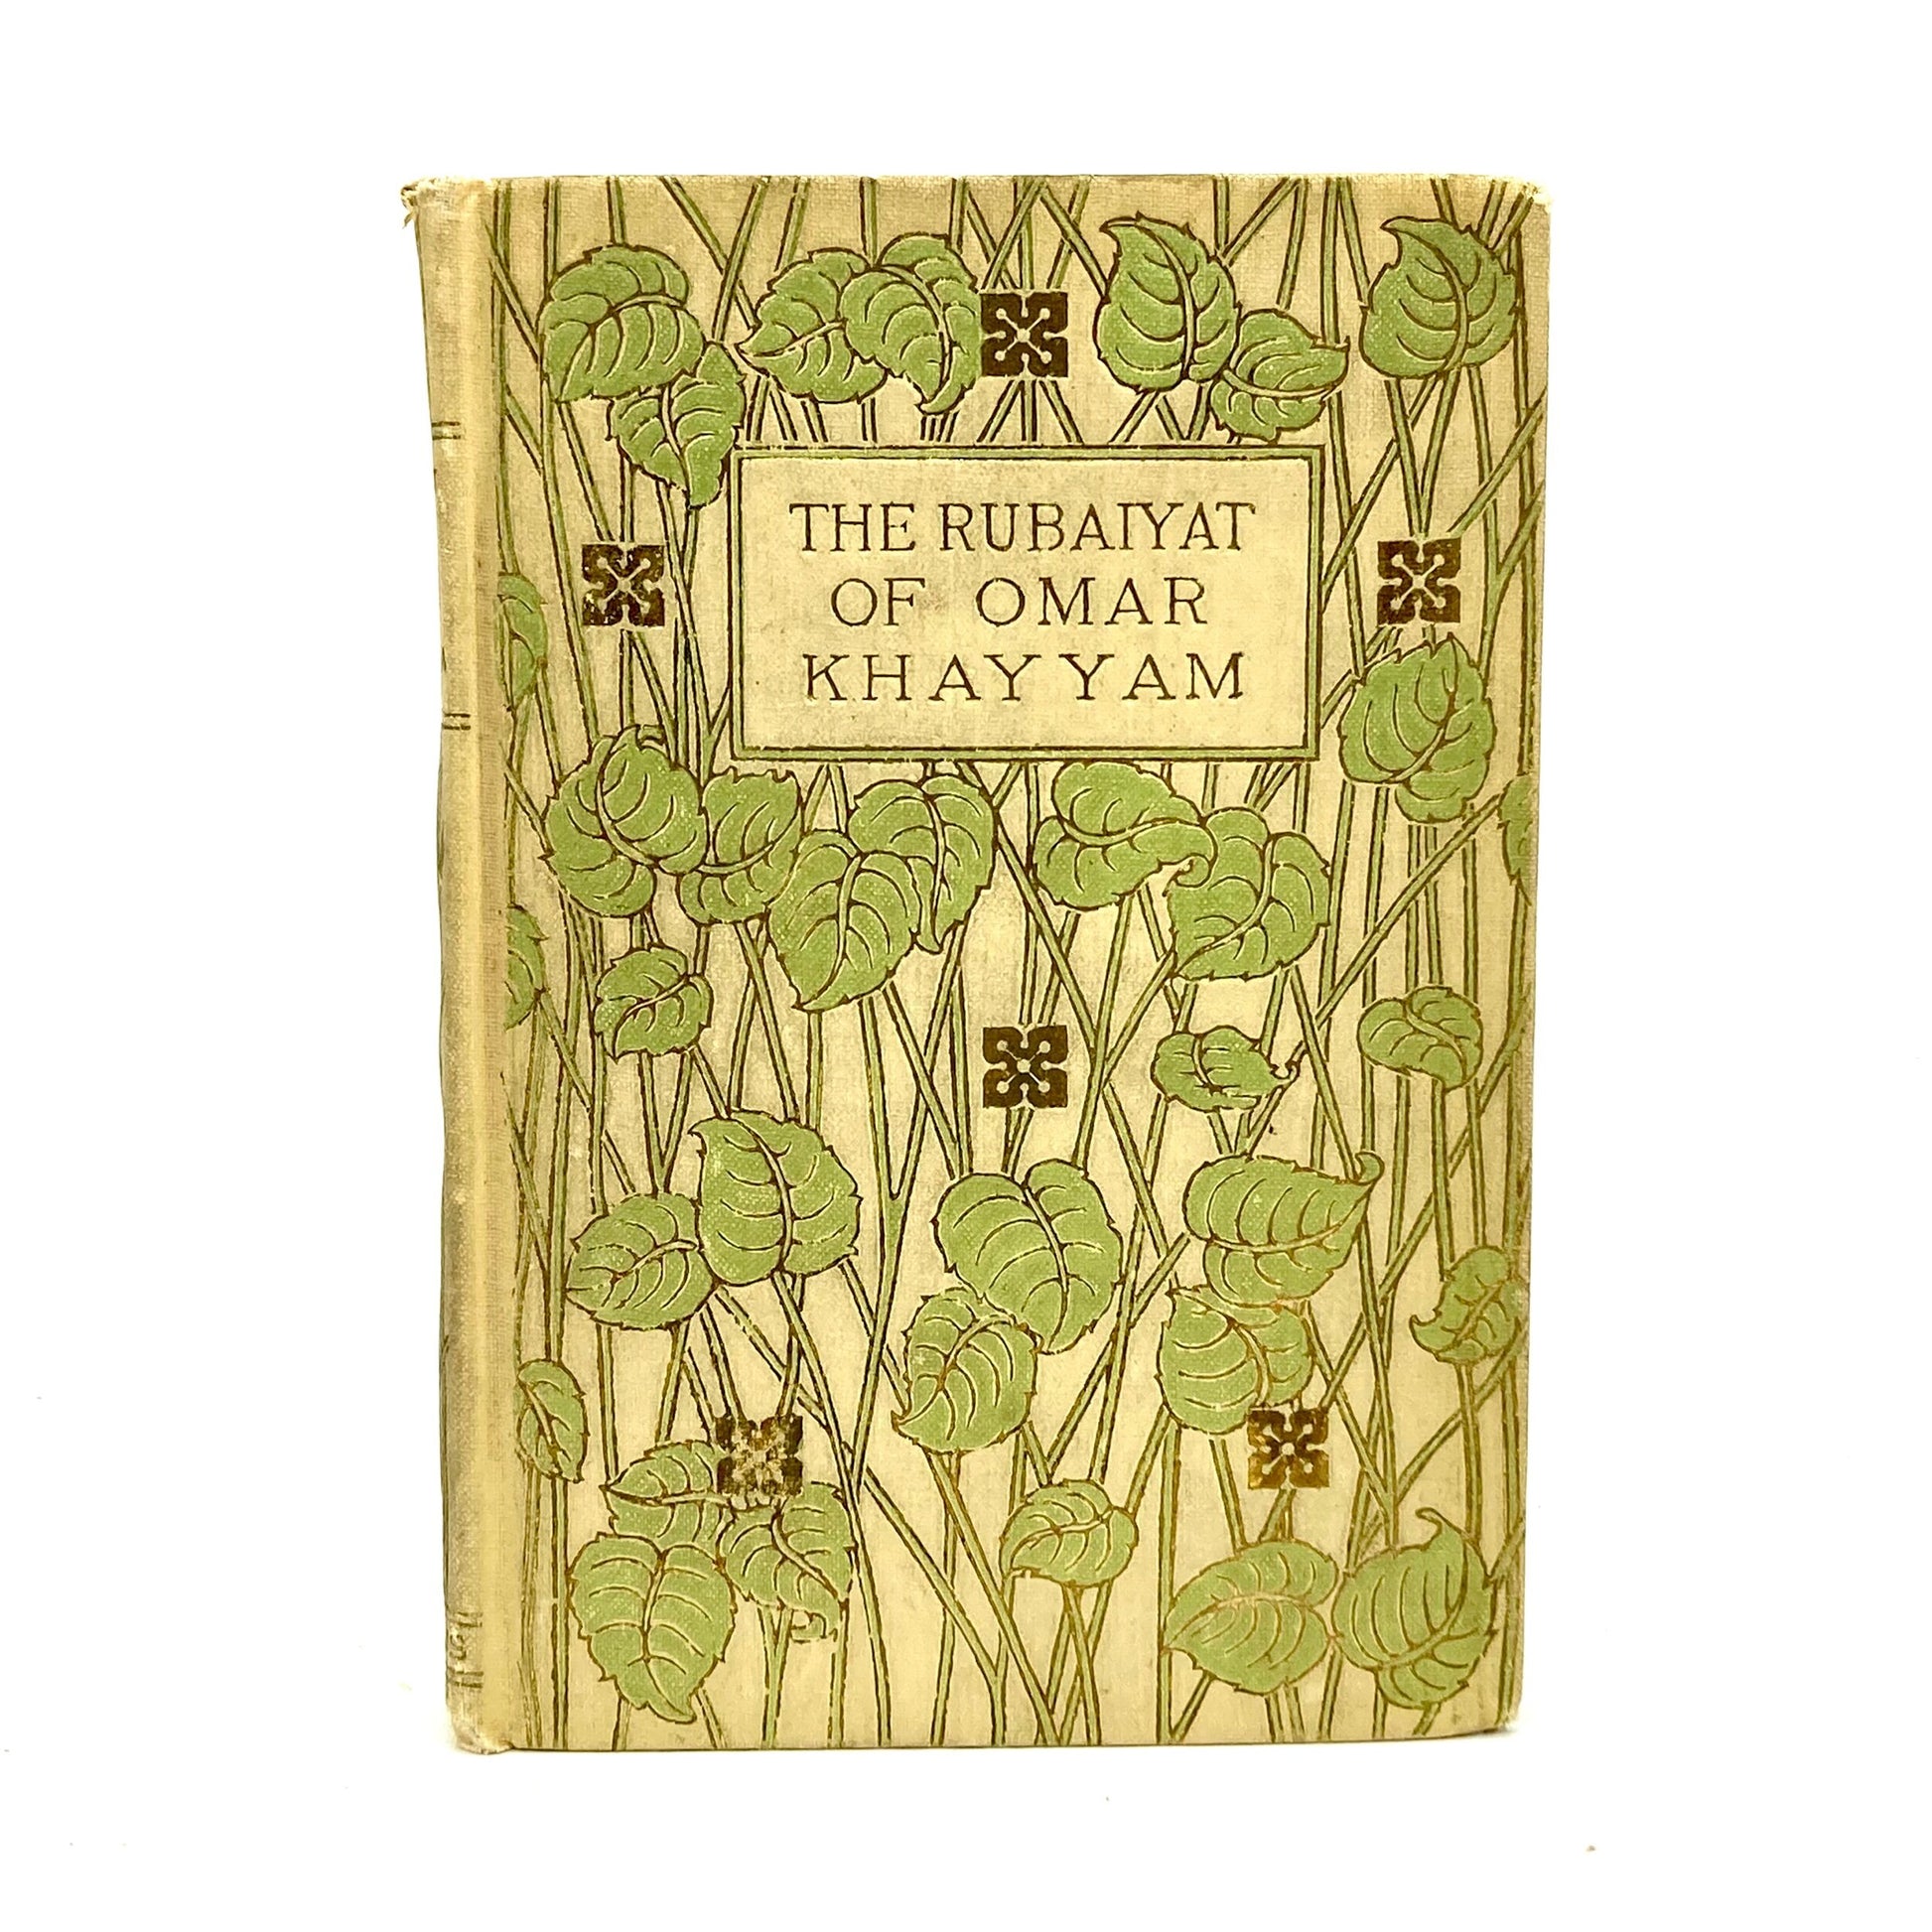 KHAYYAM, Omar "The Rubaiyat" [Henry Altemus, c1908-9] - Buzz Bookstore